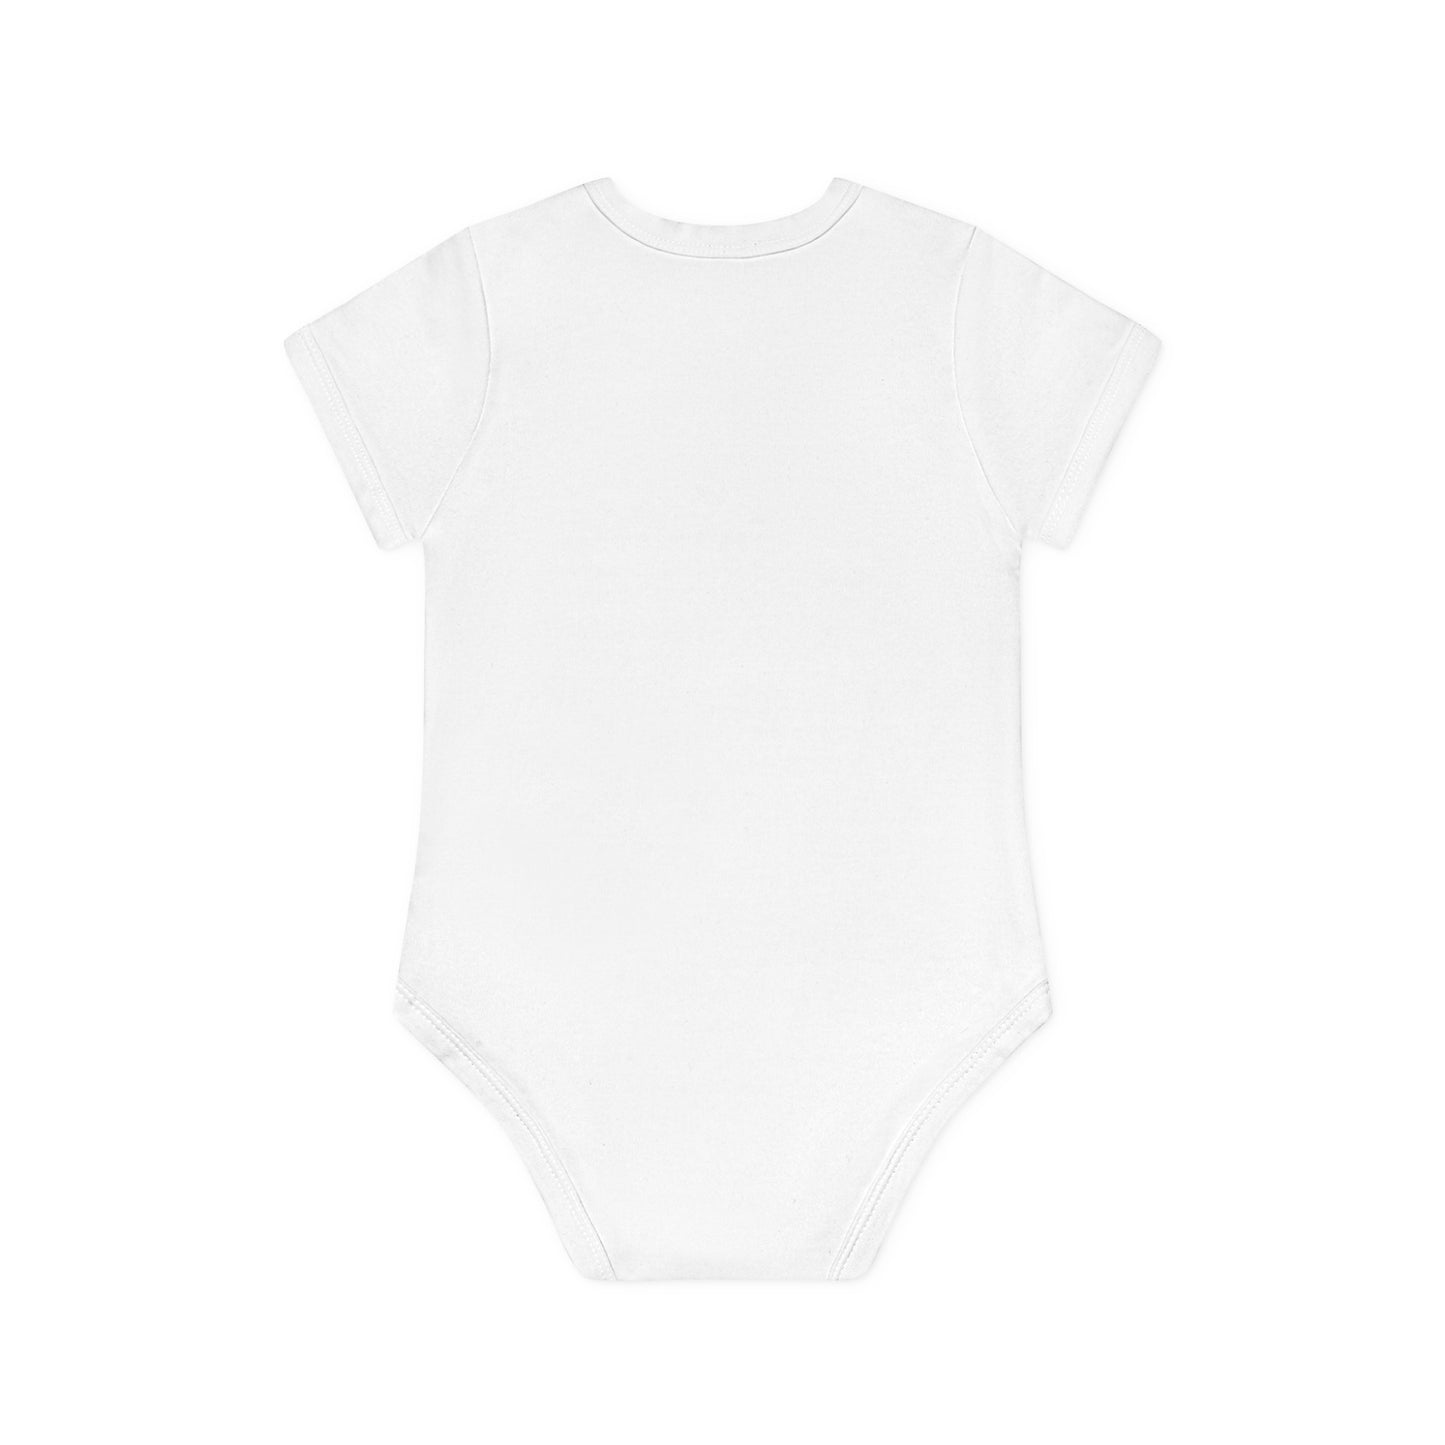 Baby Organic Short Sleeve Bodysuit, "My Aunt Loves Me" Design/ سرهمی آستین کوتاه نوزاد پنبه ارگانیک طرح عمه جونم عاشقمه